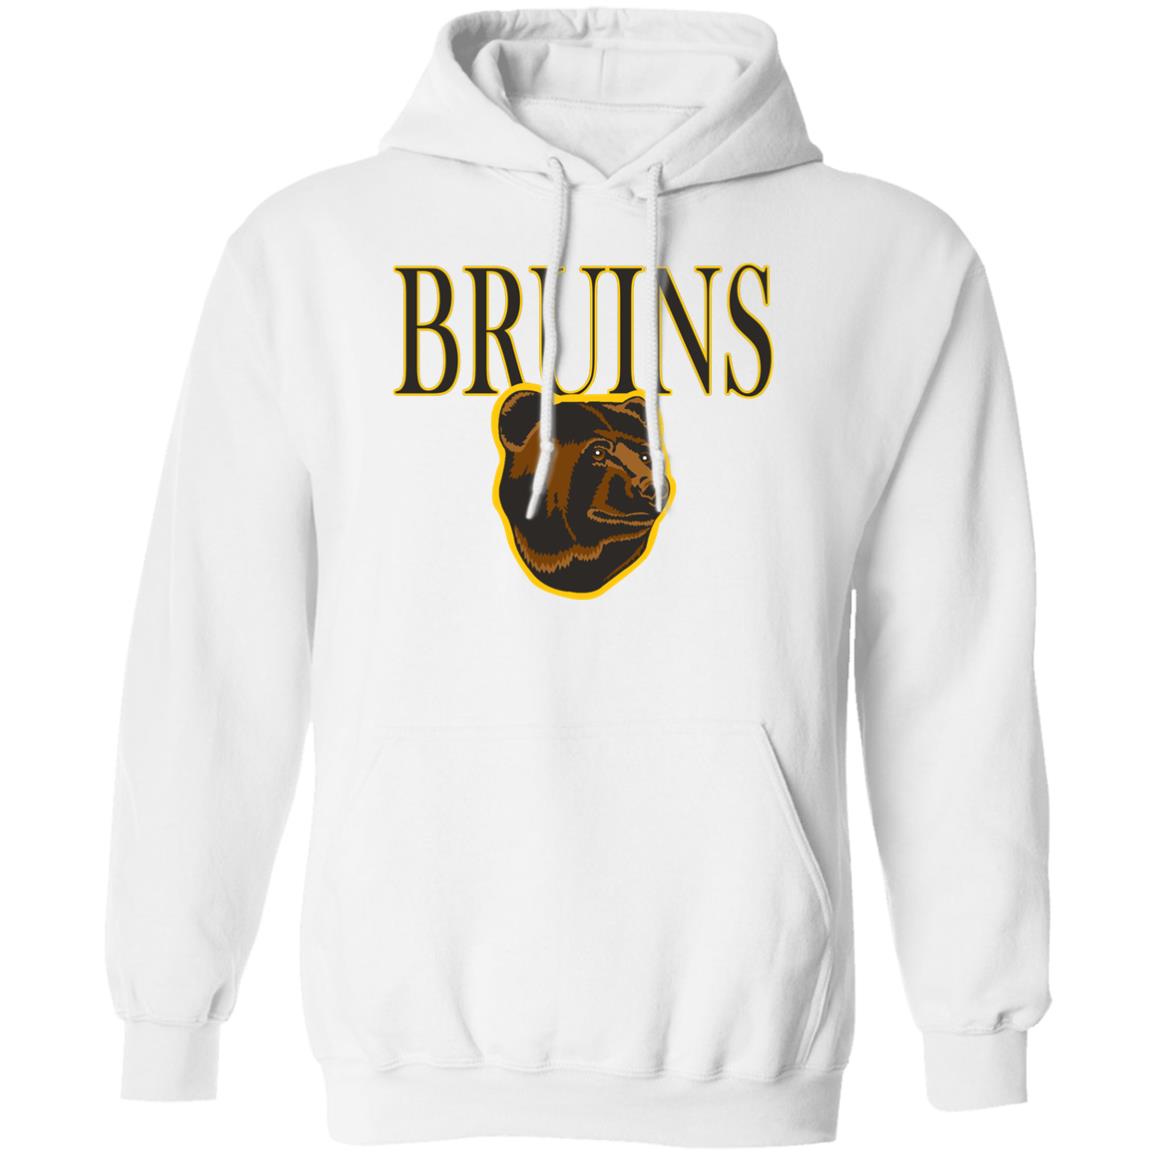 Bruins Pooh Bear Champion Hoodie Sweatshirt, Royal Blue Heather / 2XL